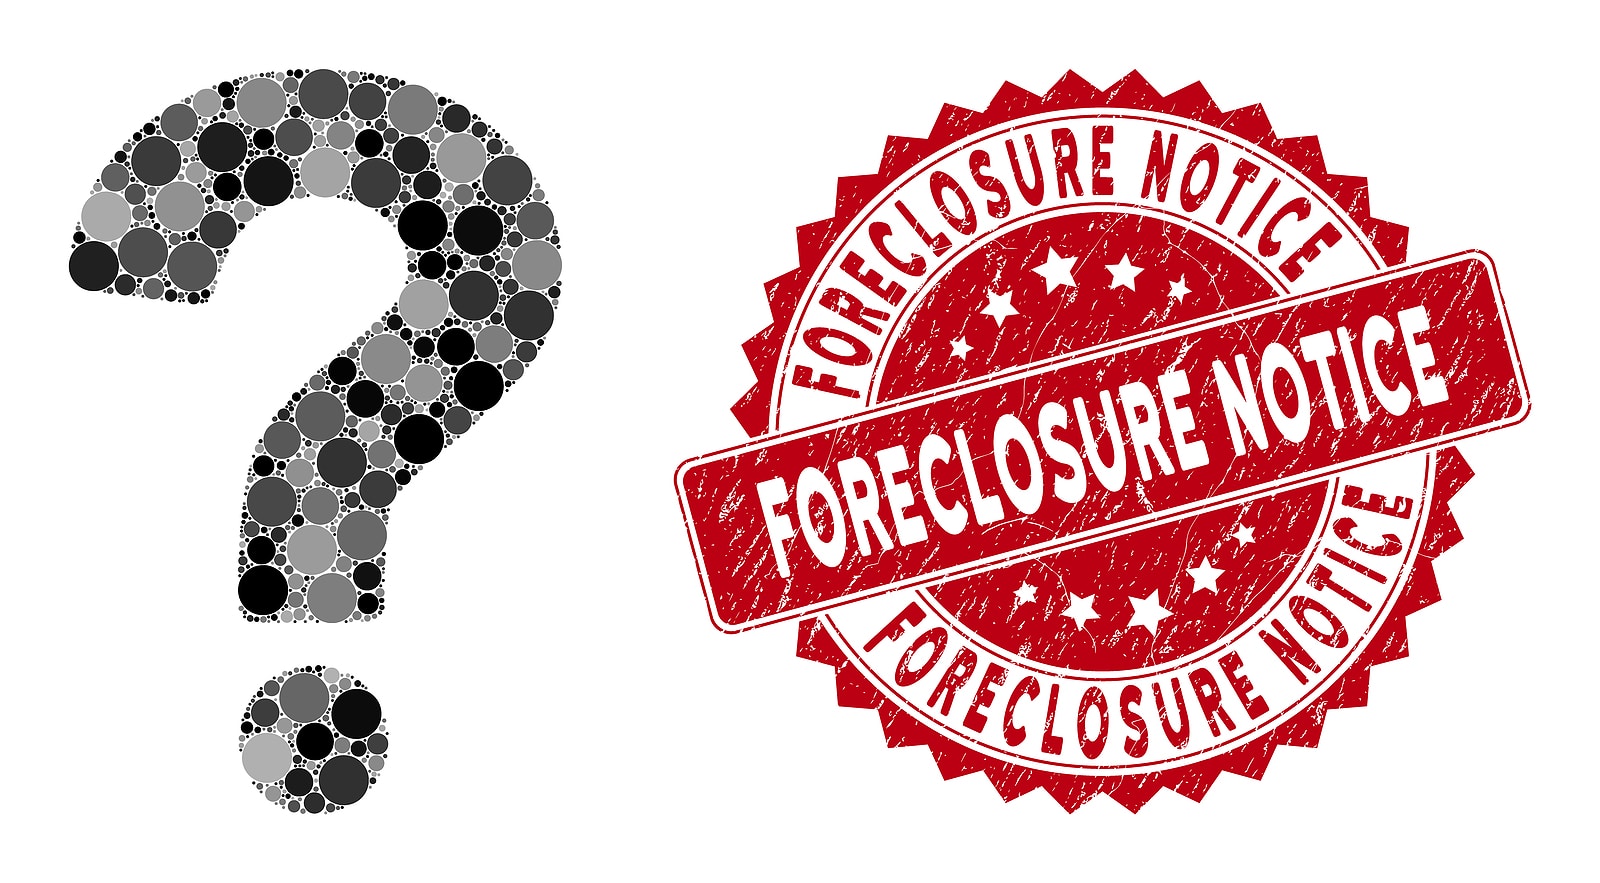 How Does Foreclosure Work in Utah?